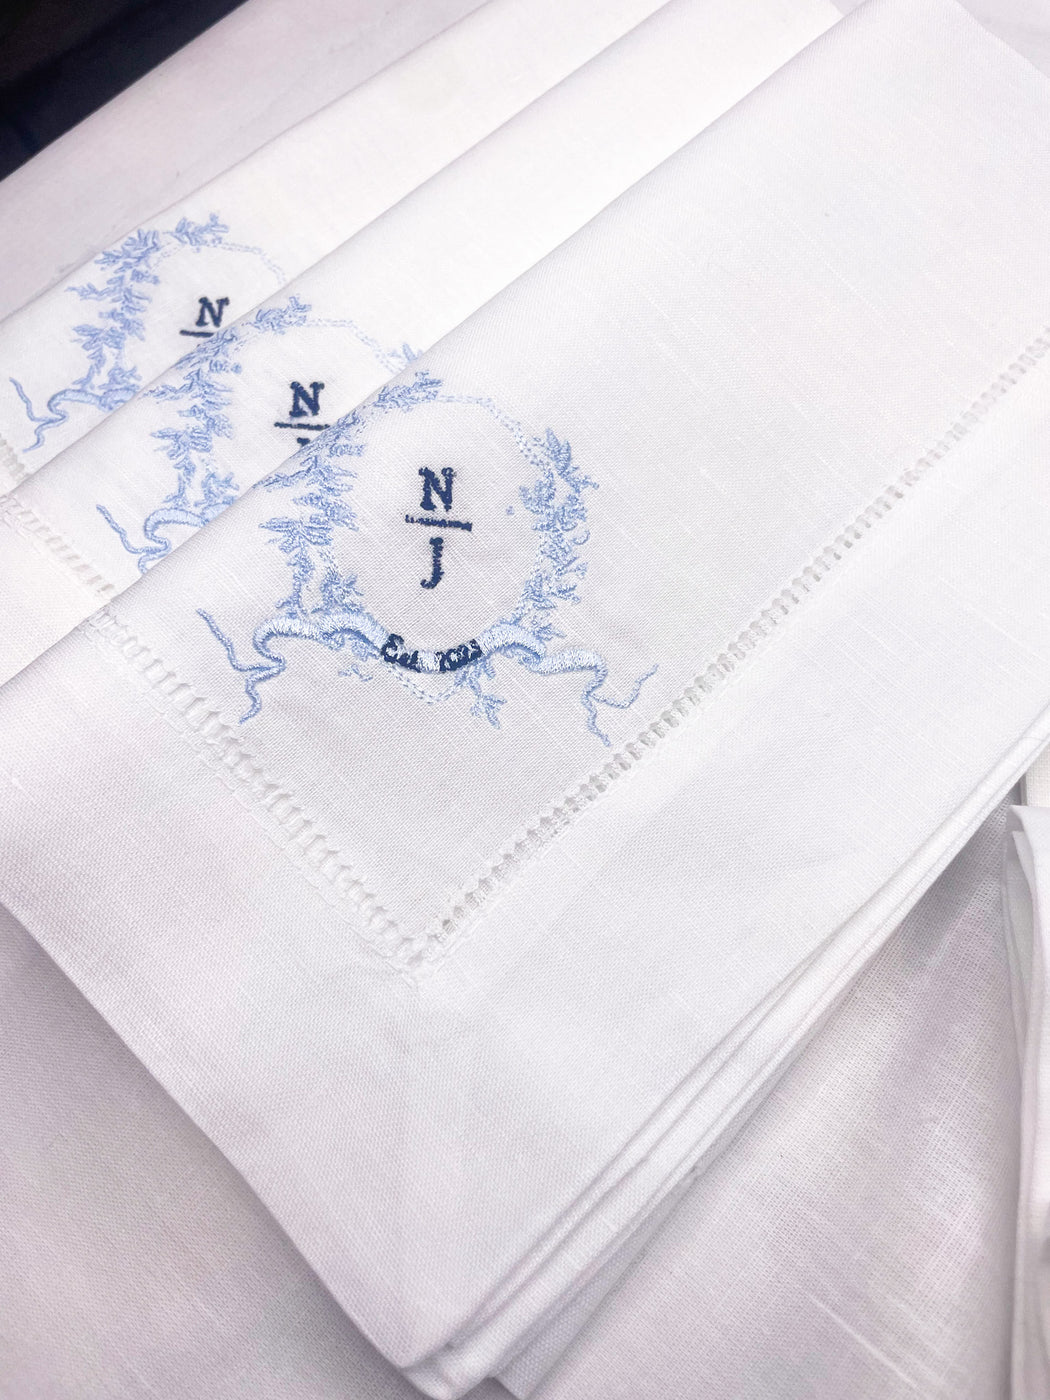 Linen/Cotton Blend Hemstitched Dinner Napkins - Custom couple logo with wreath or frame